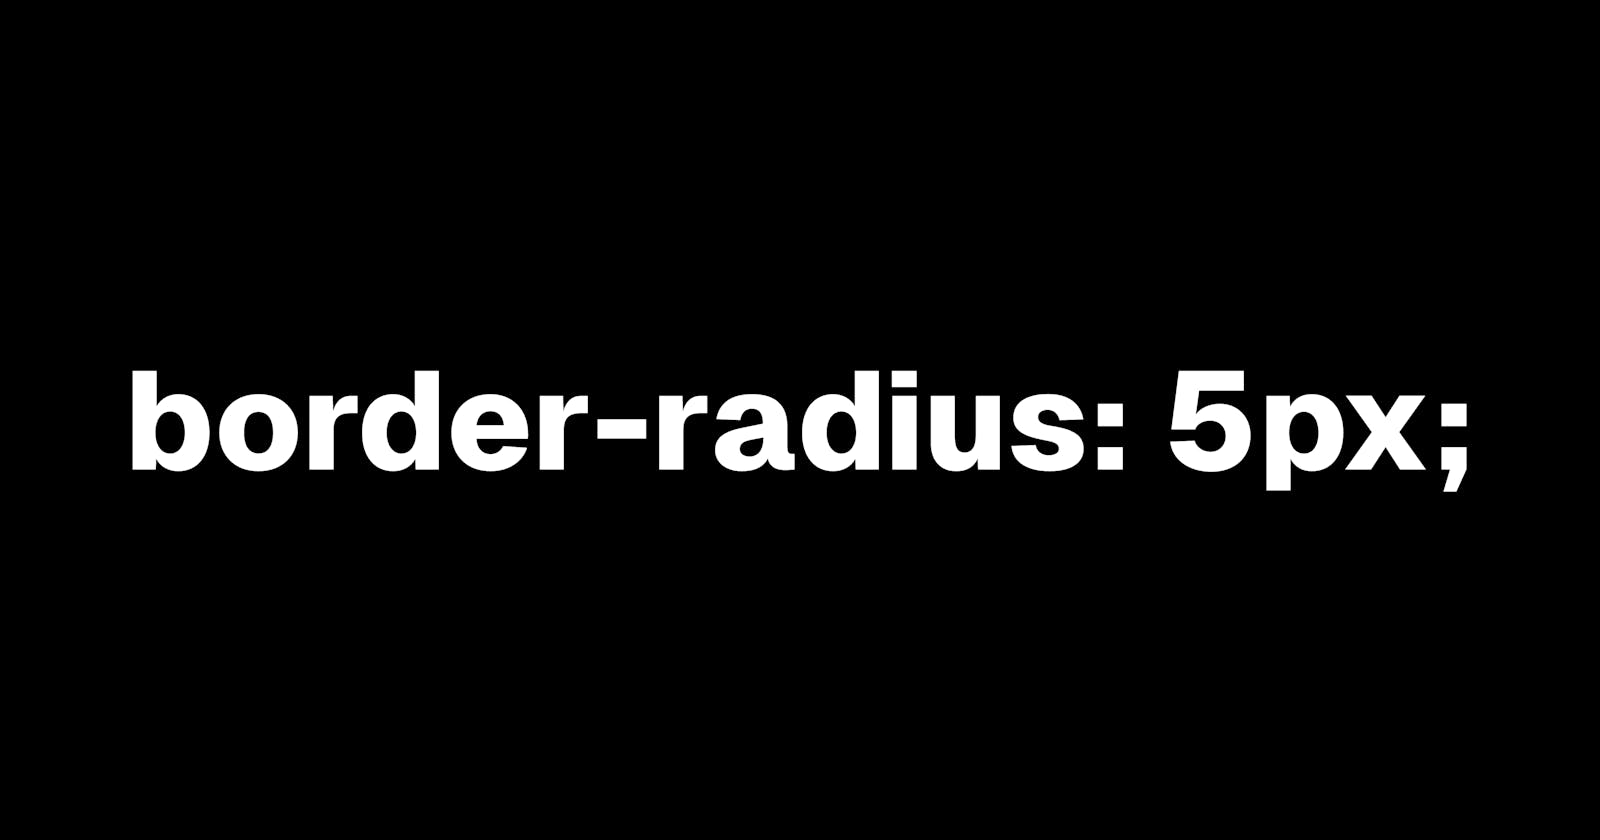 HTML Table with Border Radius